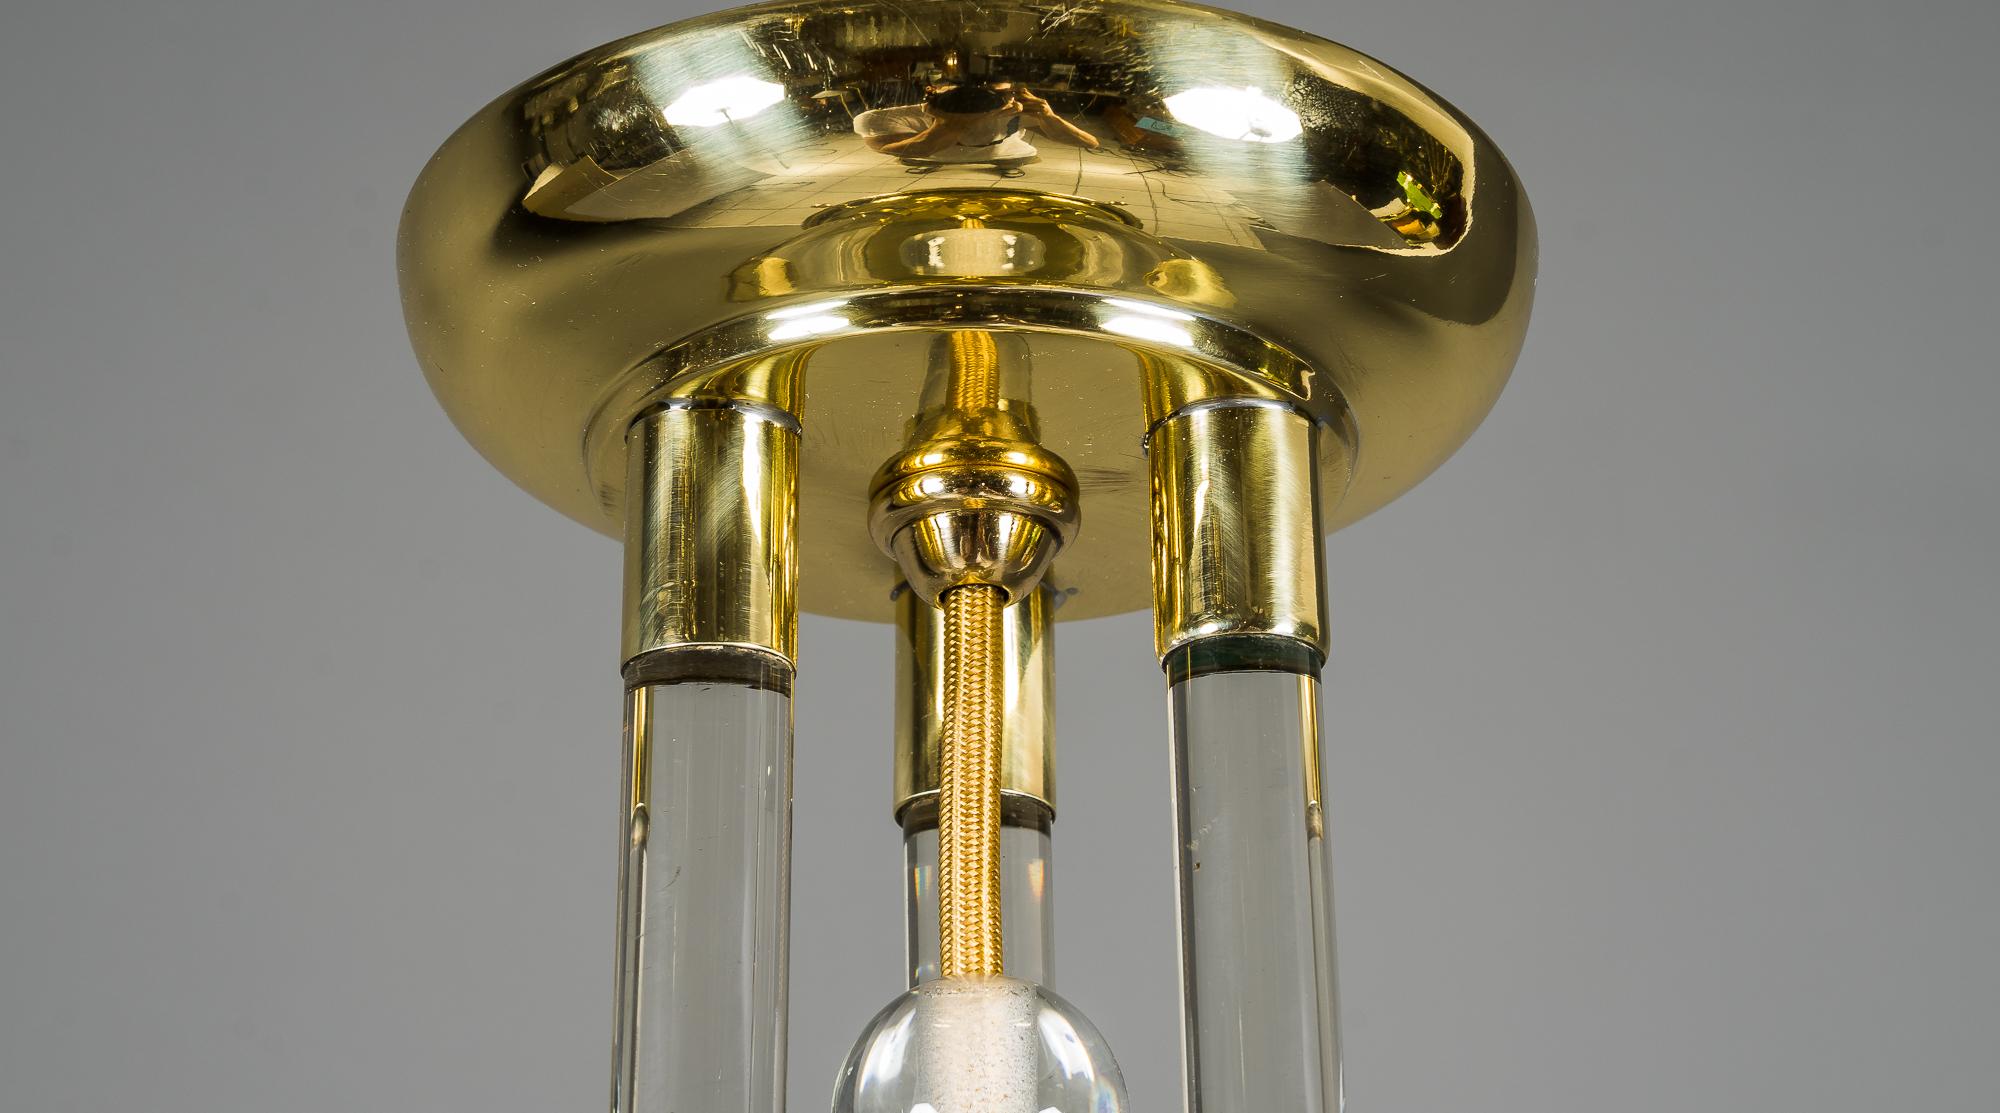 Austrian Art Deco Ceiling Lamp with Original Old Cut Glass Shade, Vienna, Around 1920s